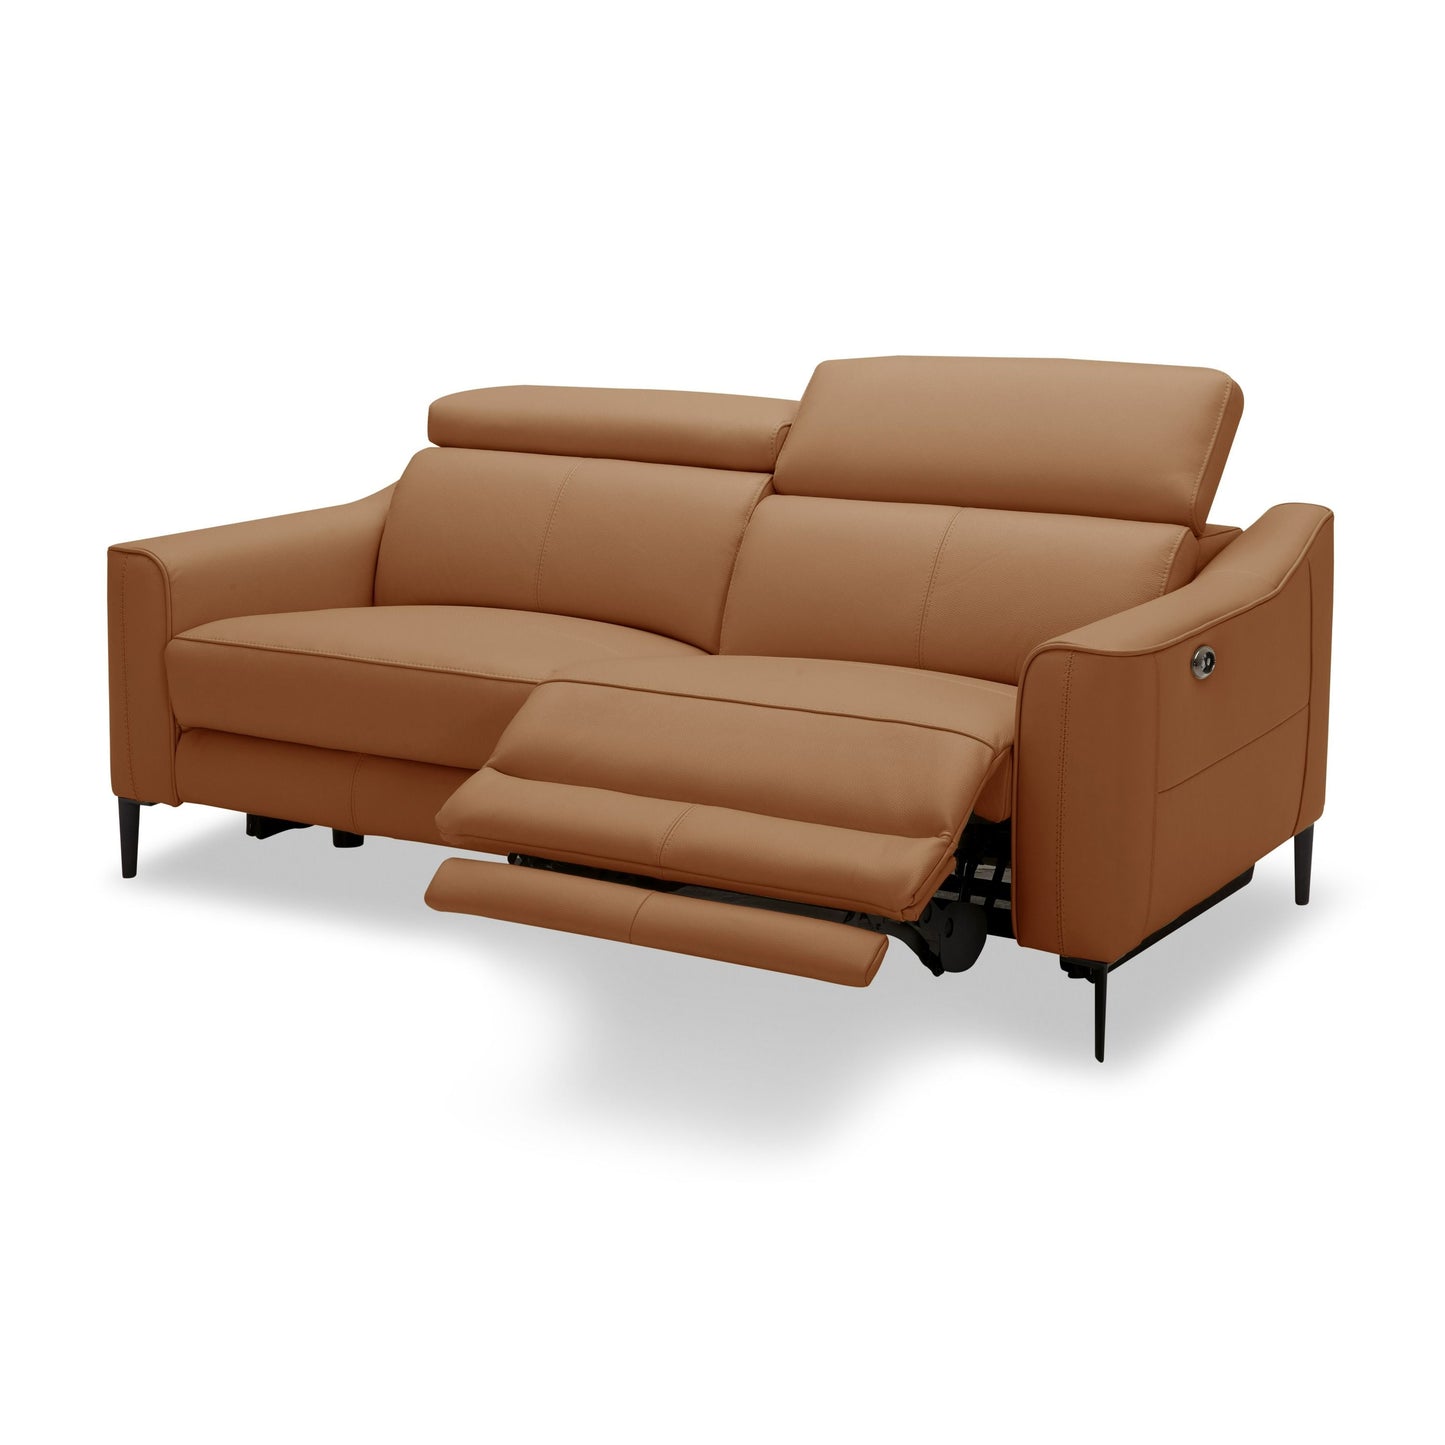 Divani Casa Eden - Modern Camel Leather Sofa With 2 Recliners